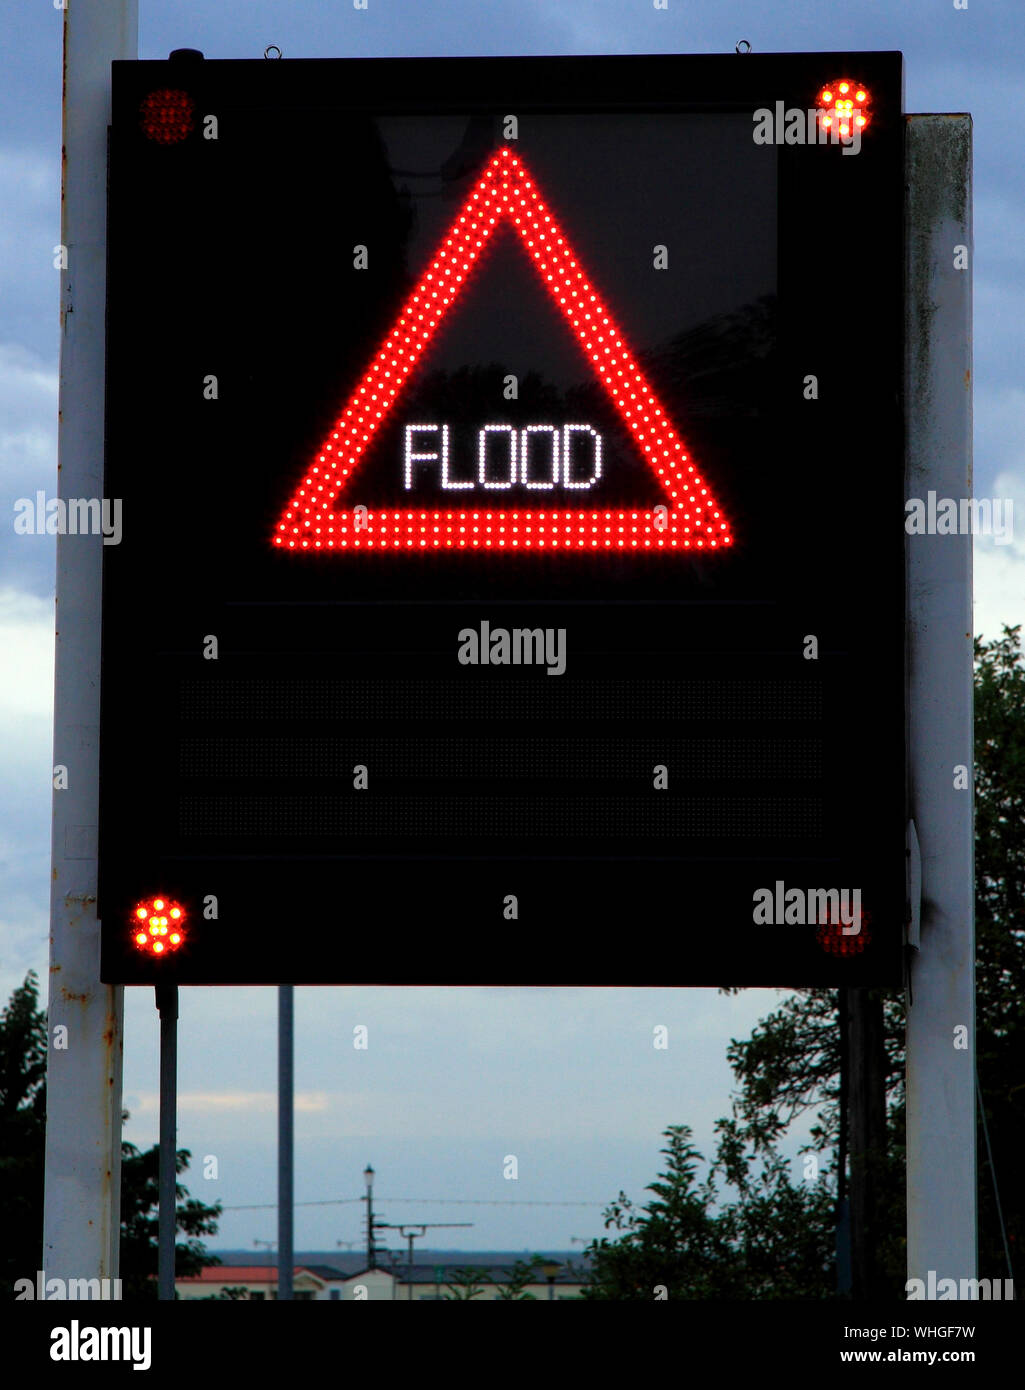 Flood Warning, coastal flooding, danger sign, illuminated, street sign, high tide, tides, alert, Hunstanton, Norfolk, England, UK Stock Photo